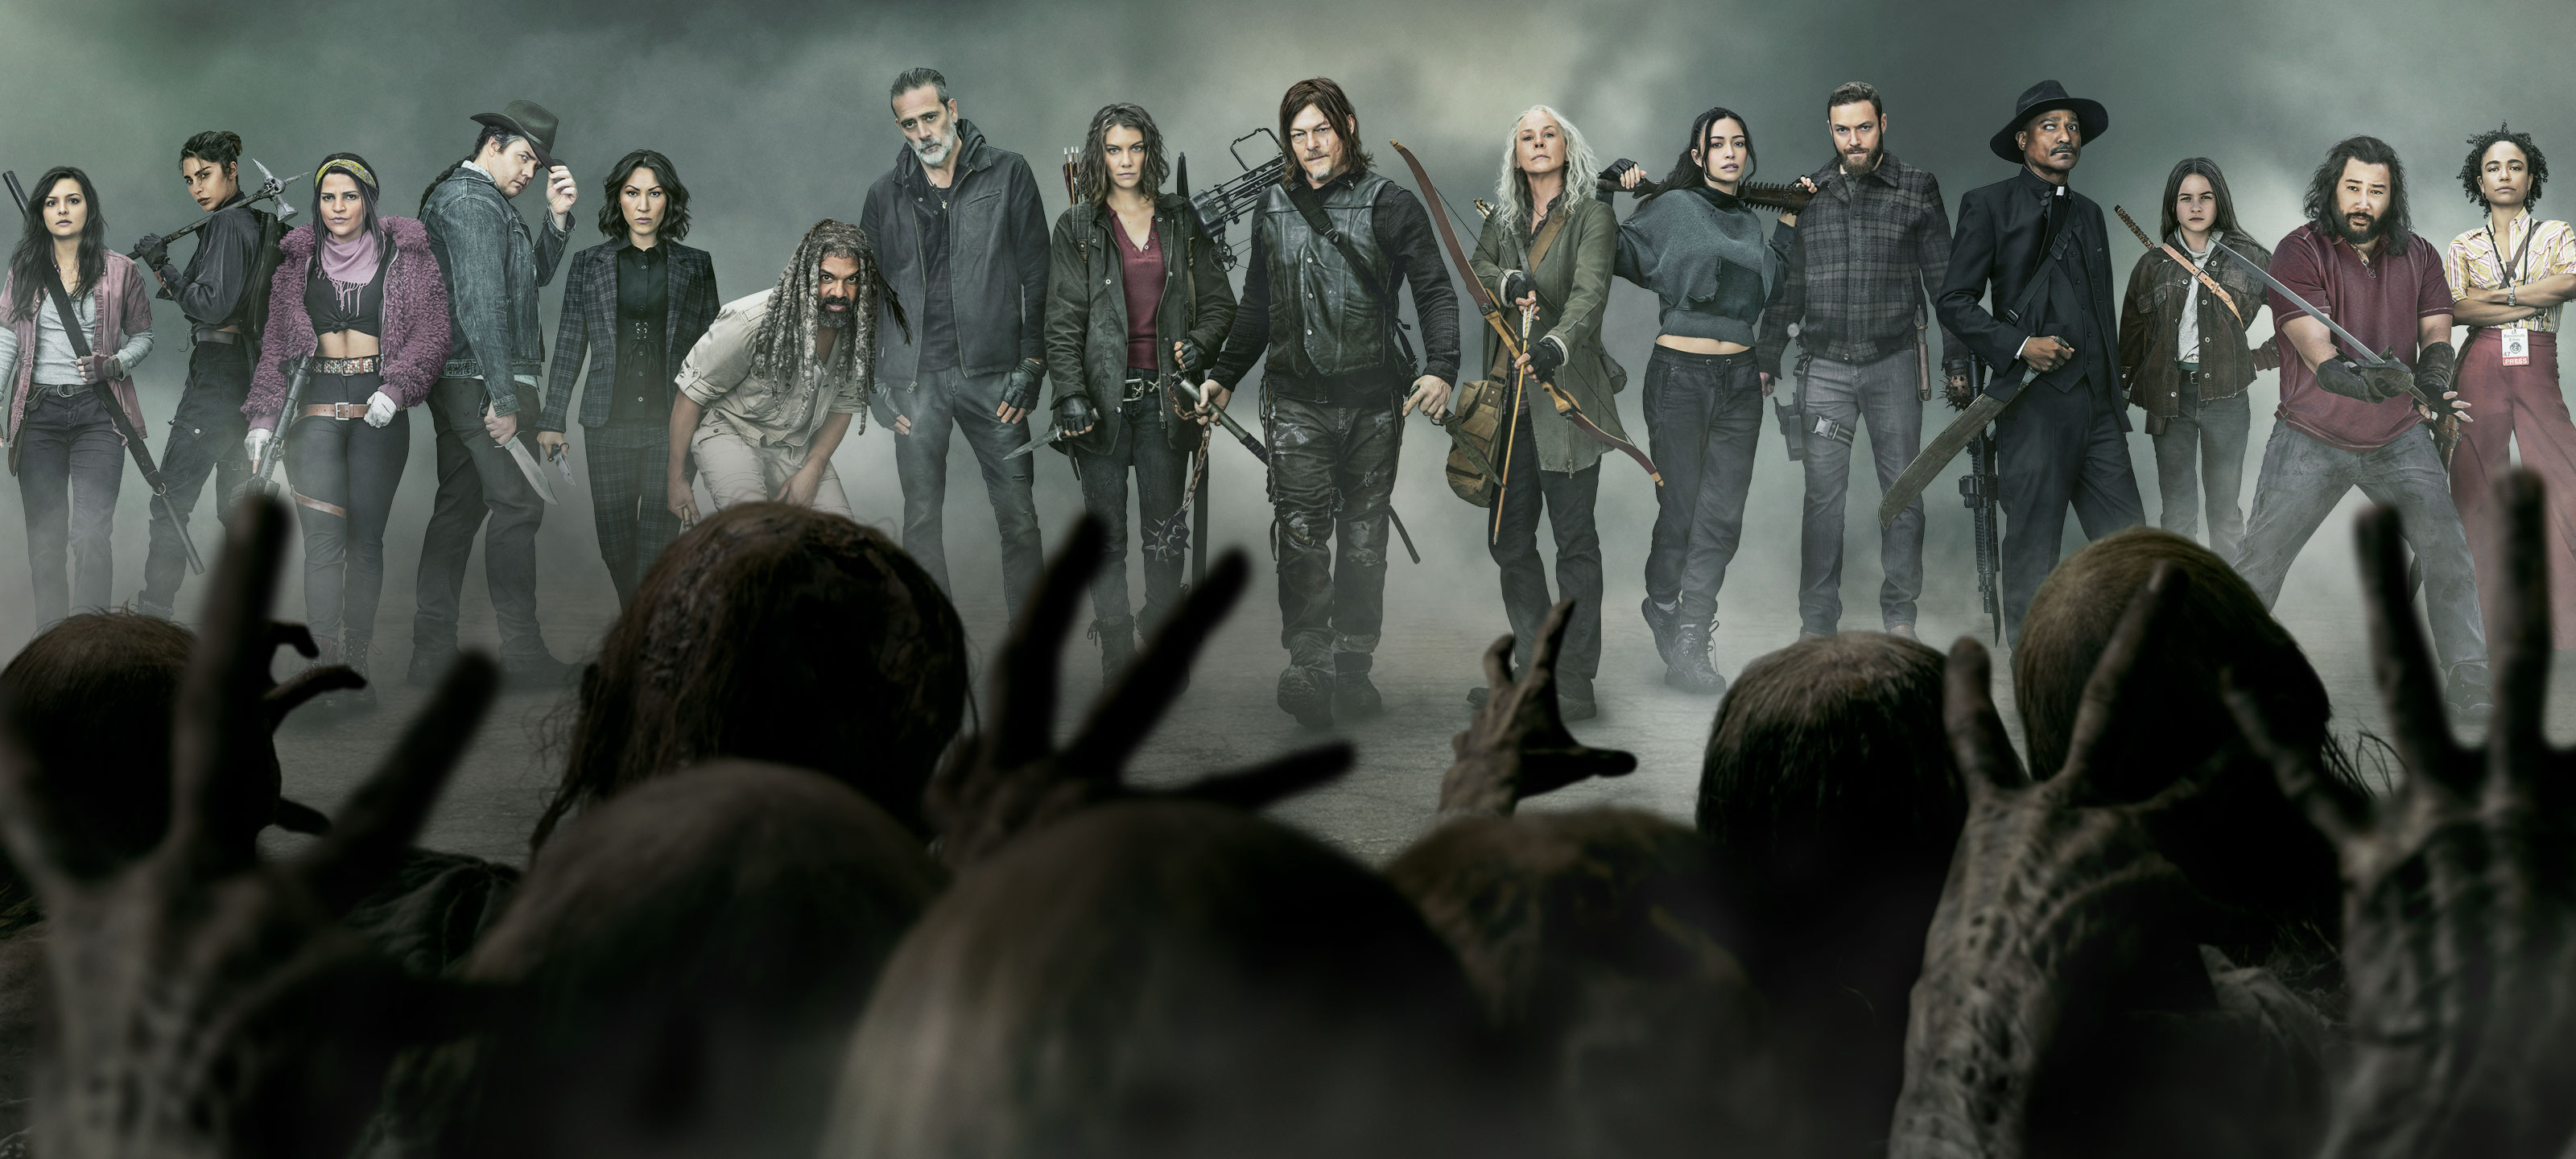 Watch The Walking Dead Online | Stream Full Episodes